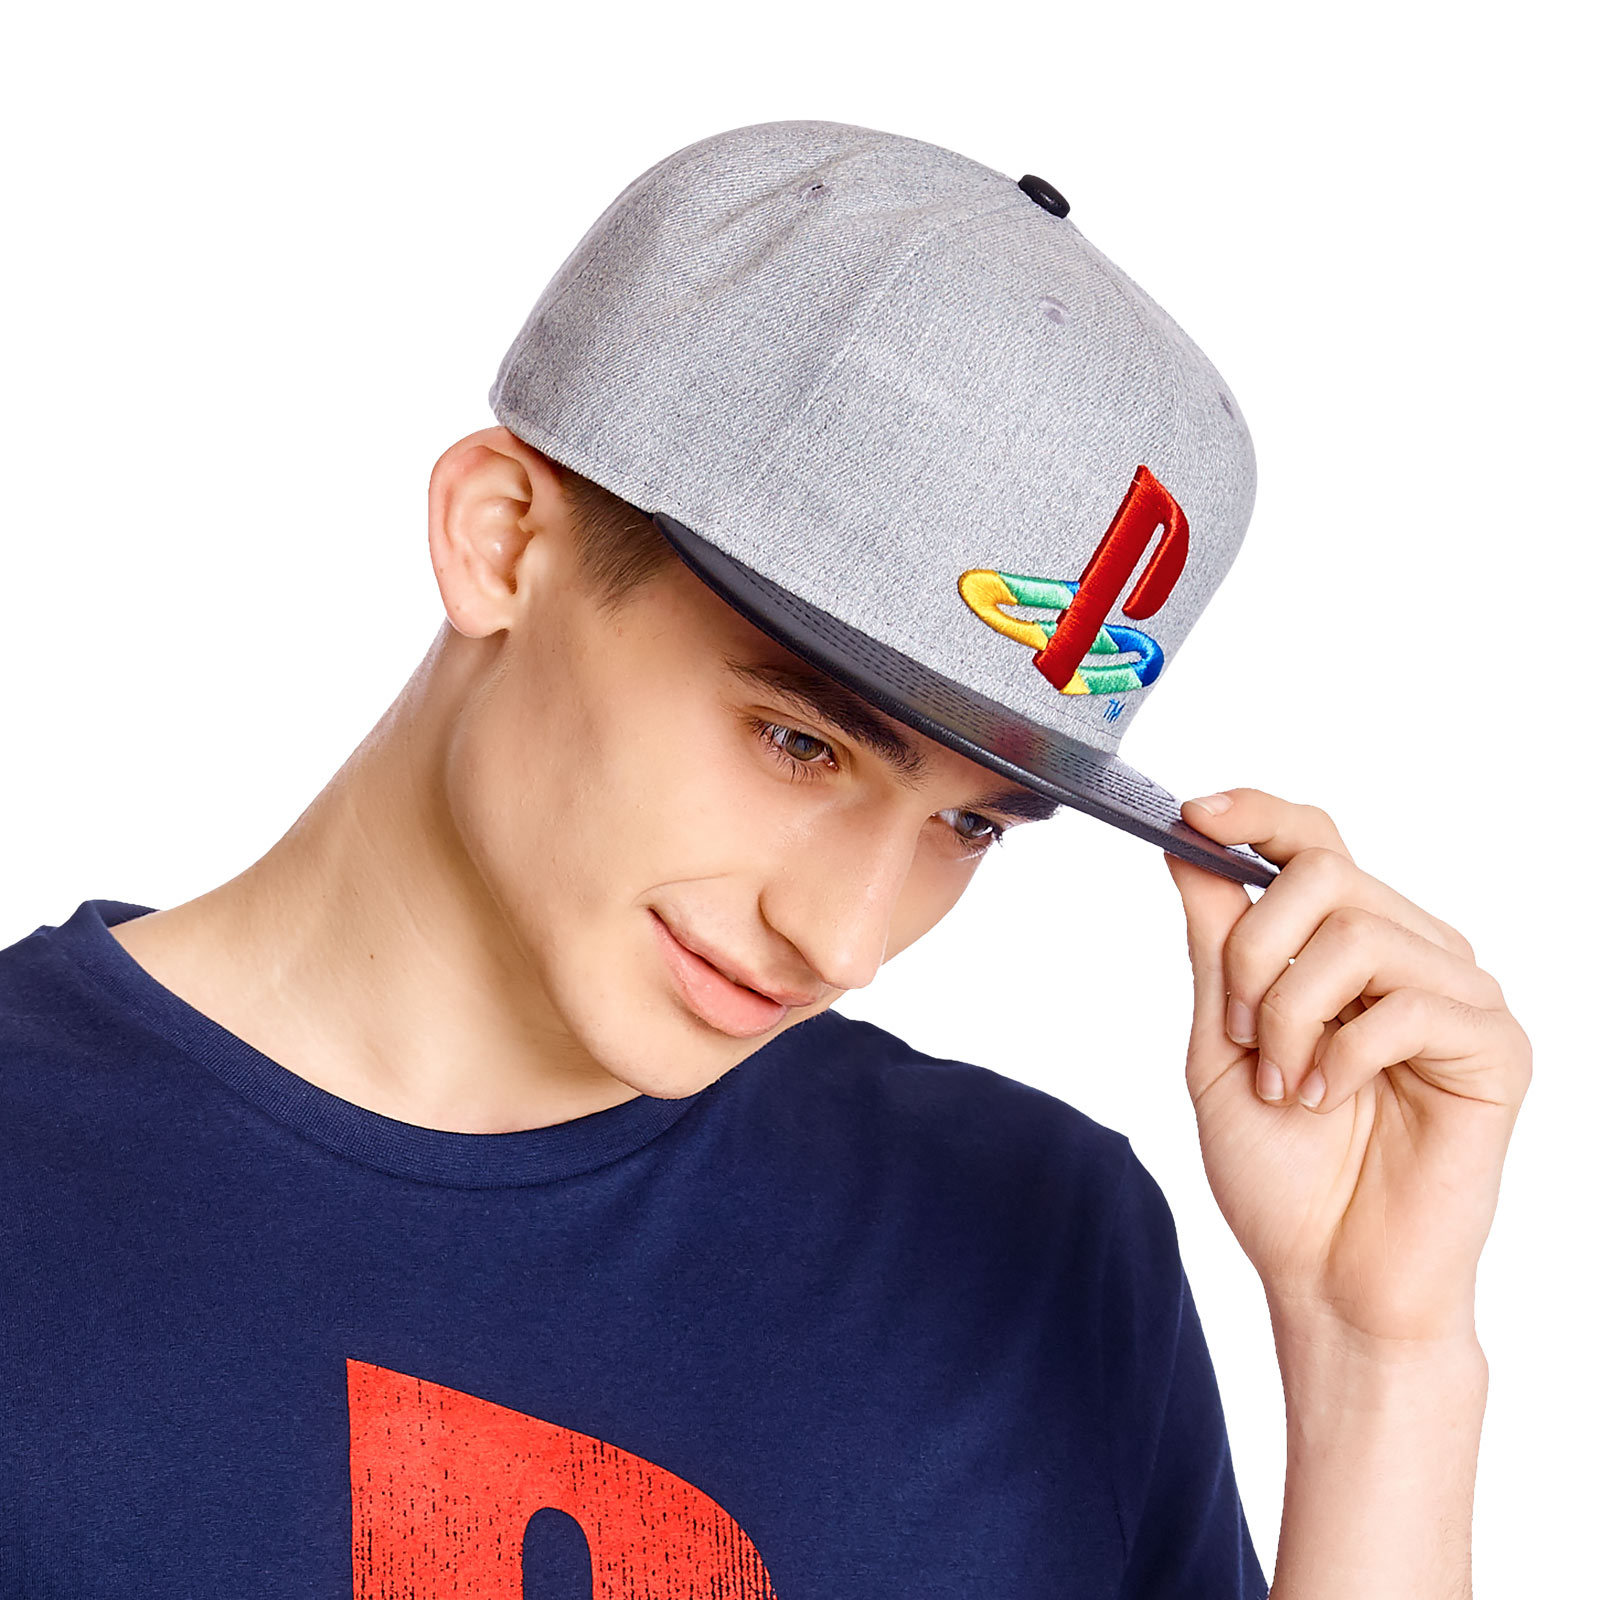 PlayStation - Logo Snapback Cap gray